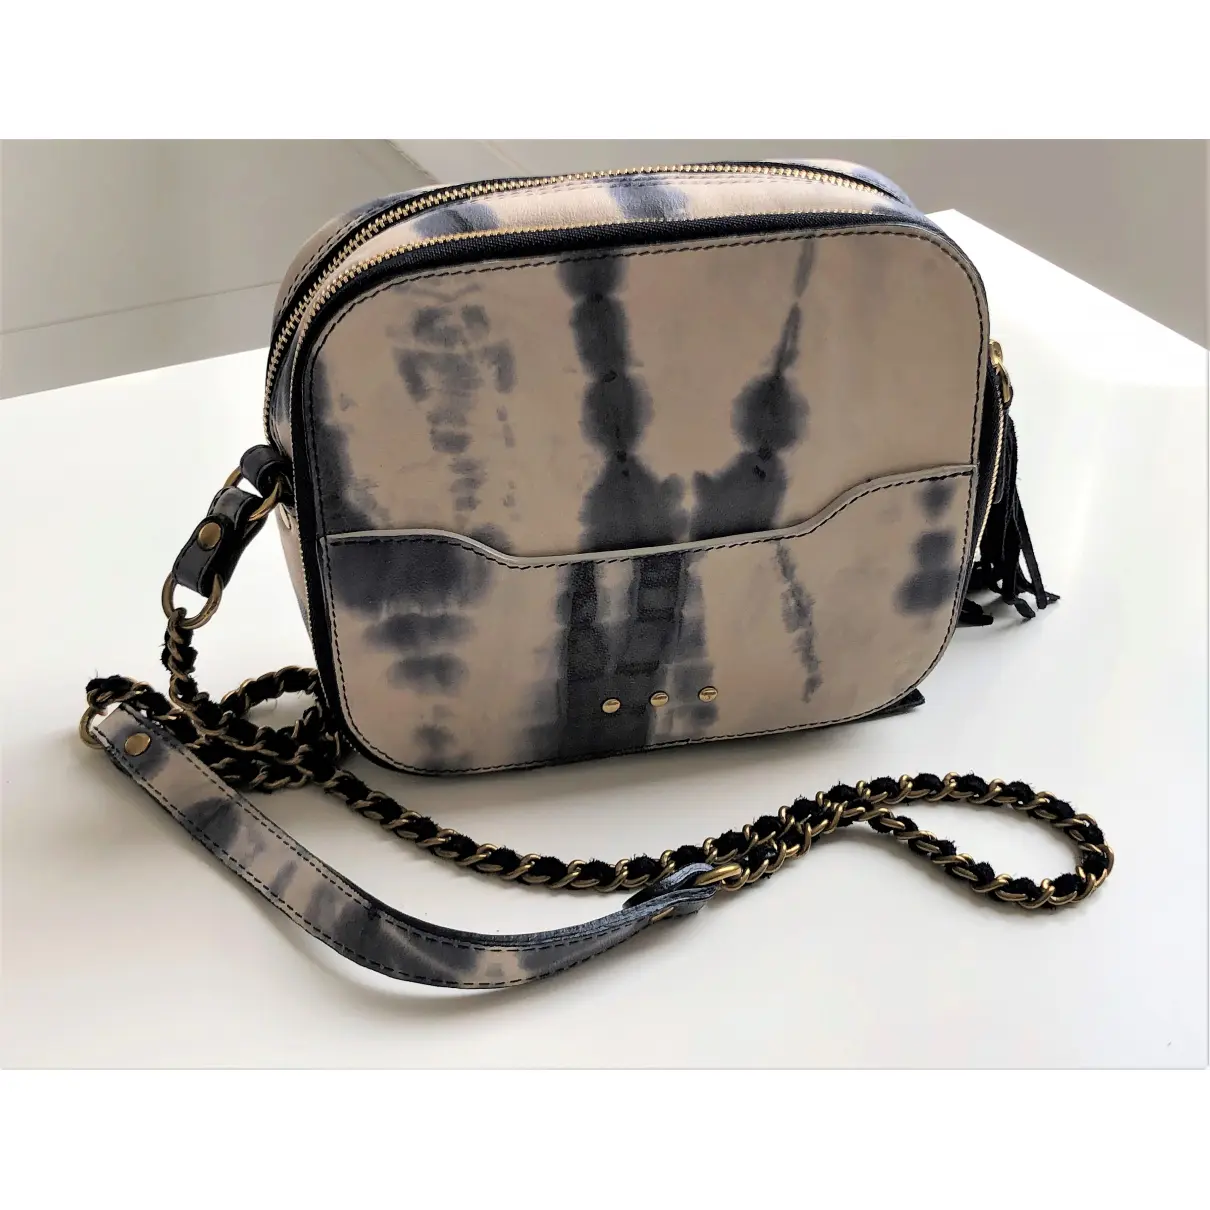 Buy Jerome Dreyfuss Pascal leather handbag online